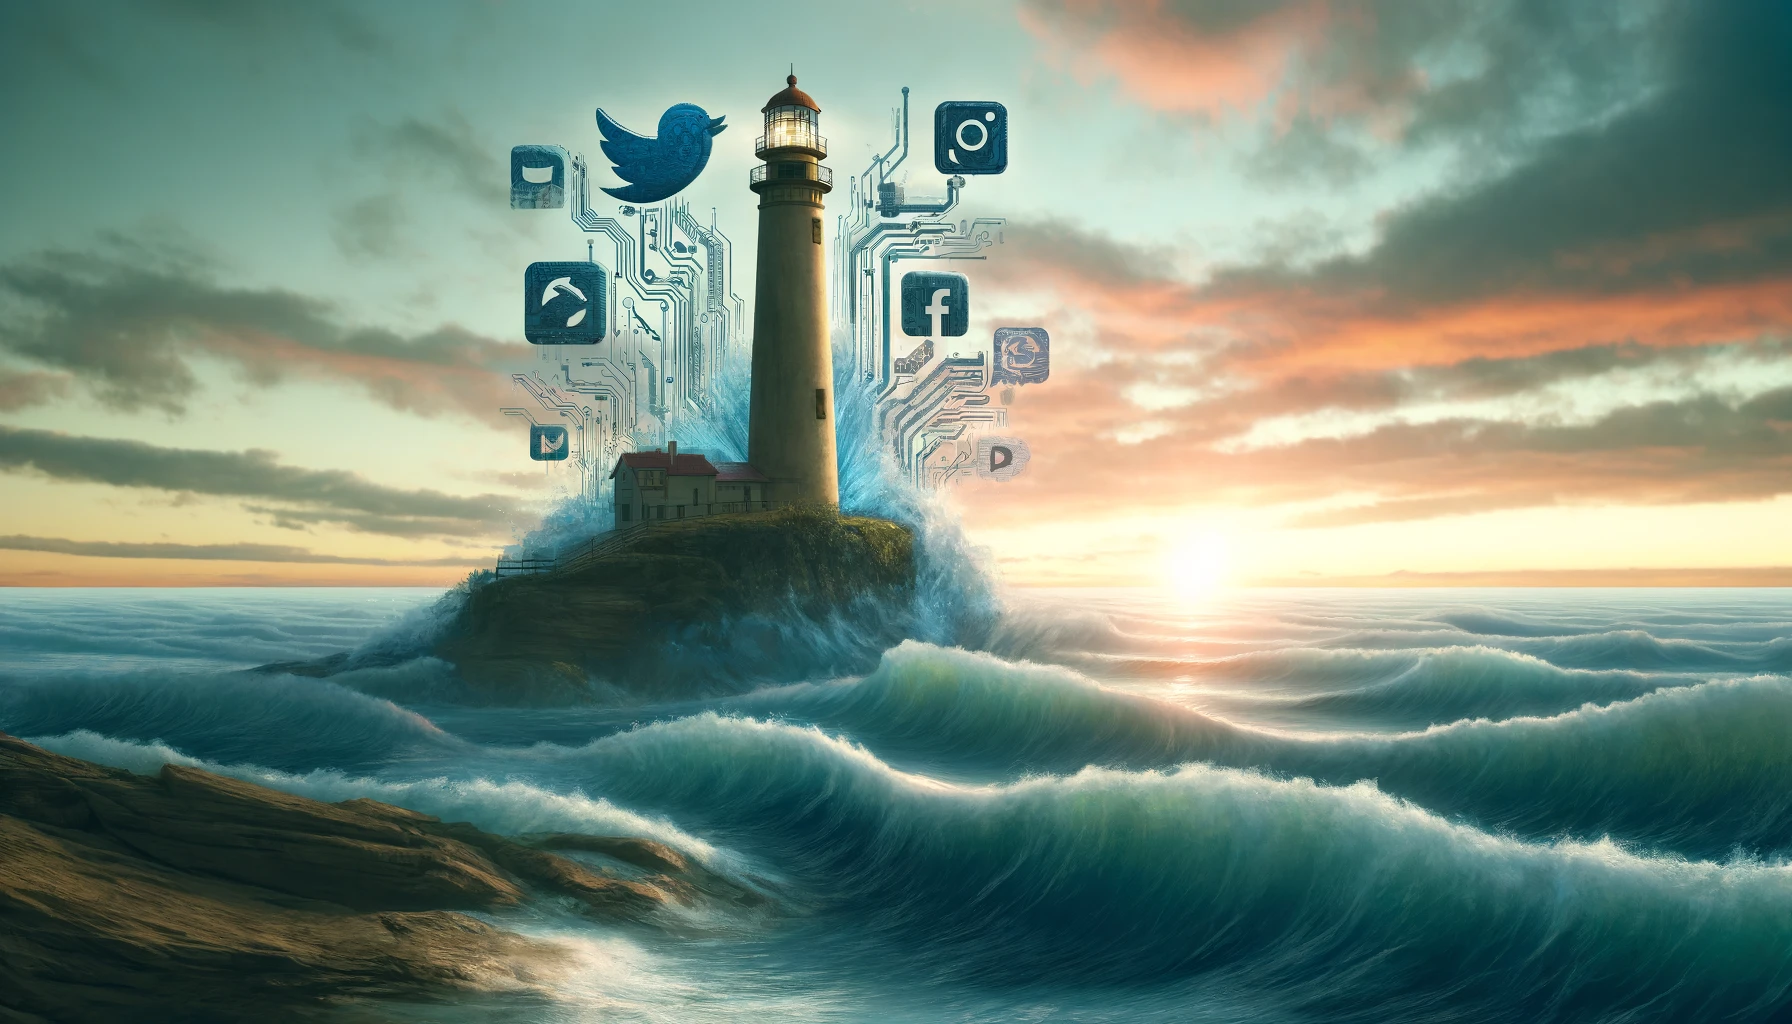 A clear beacon in the digital ocean